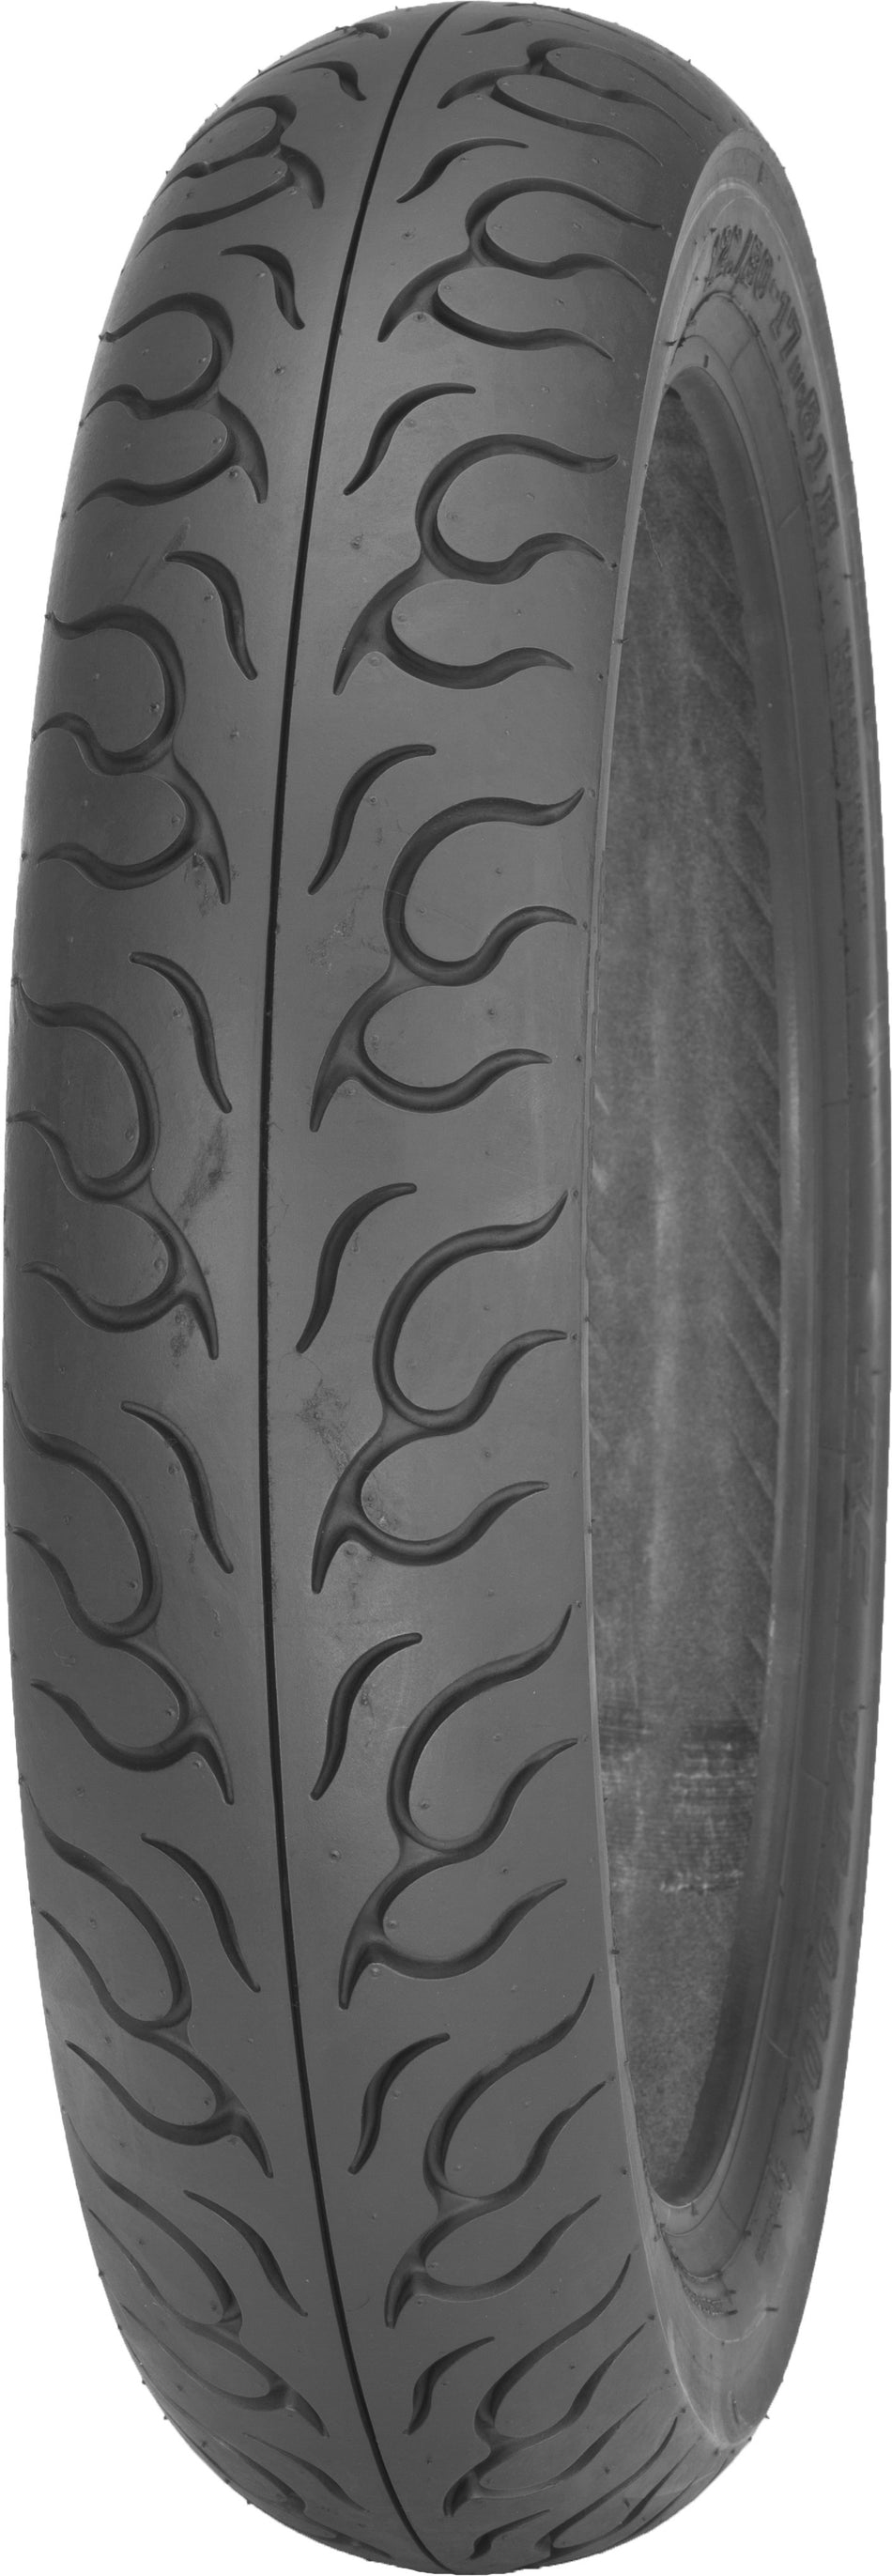 IRC Tire Wf-920 Front 120/90-17 64h Bias 302681